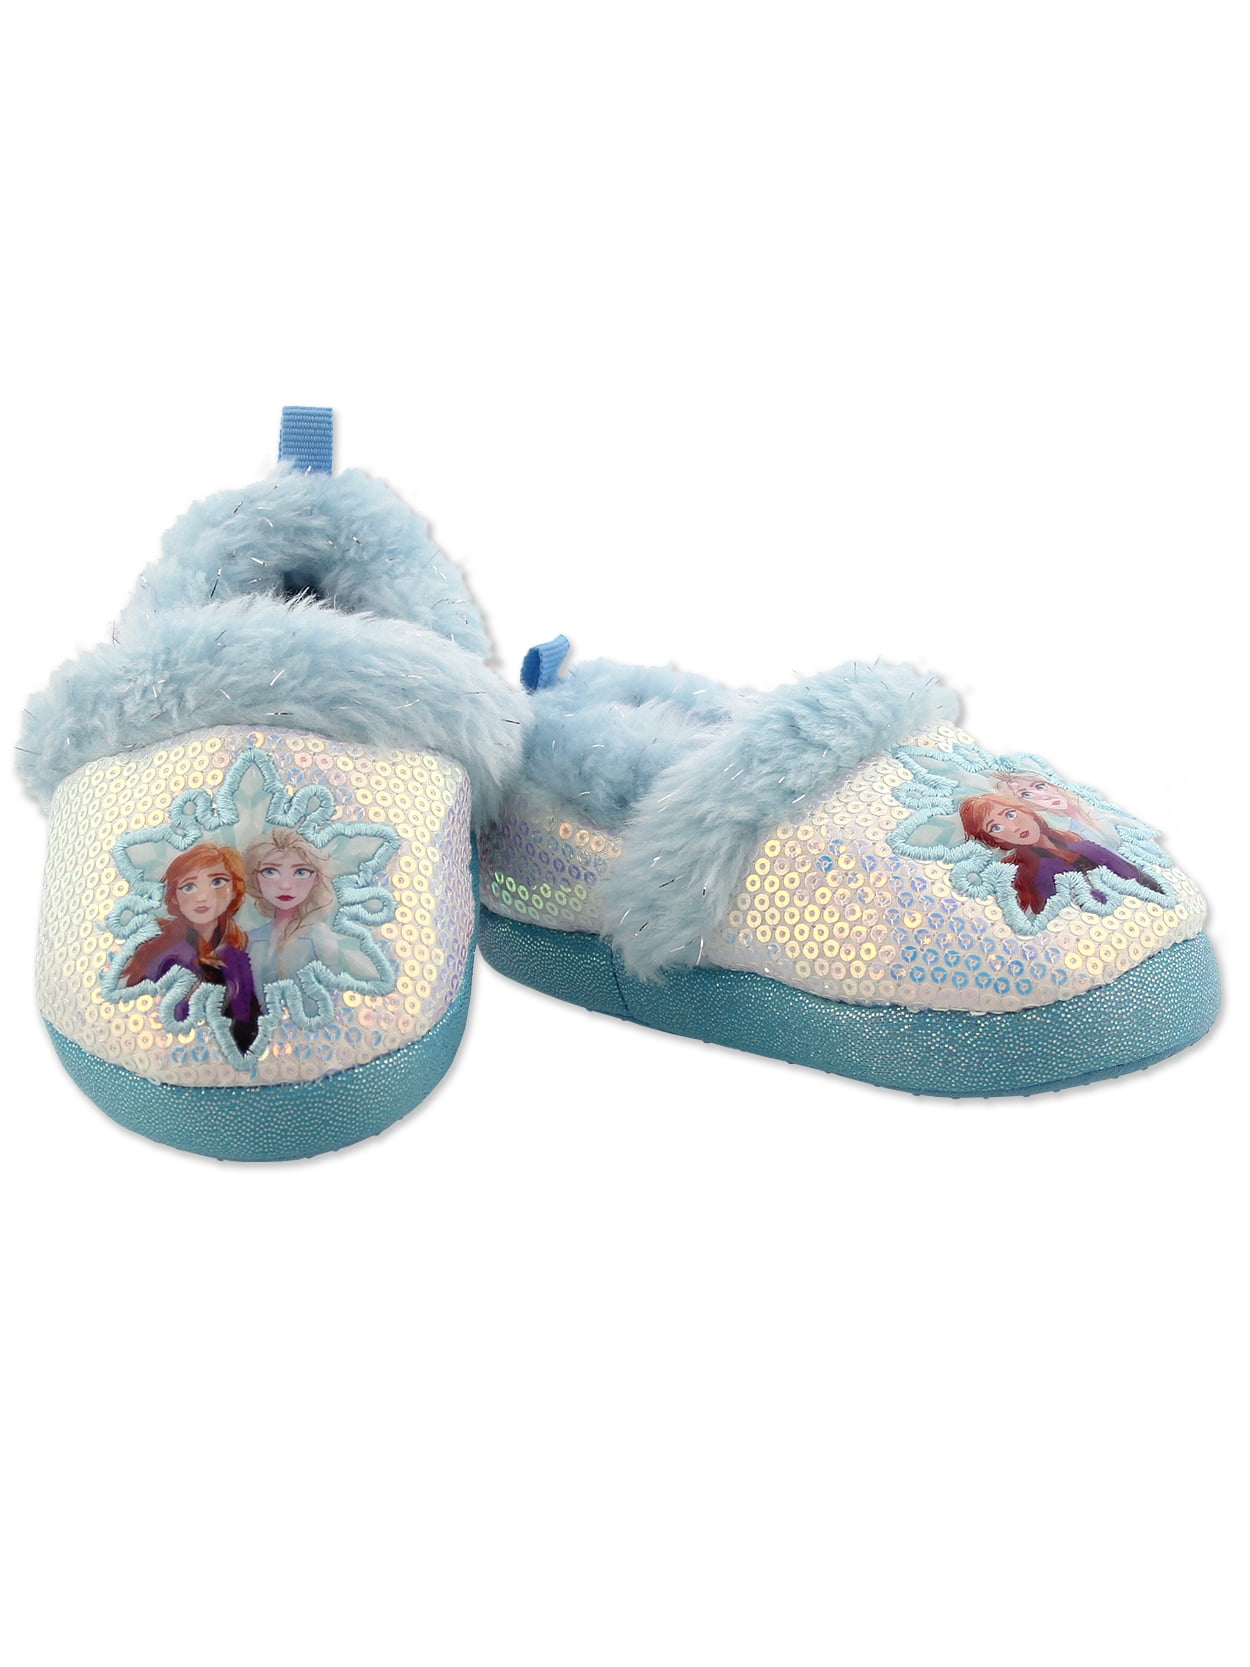 Disney Frozen Children's Slipper Socks featuring a delightful Anna design NEW 